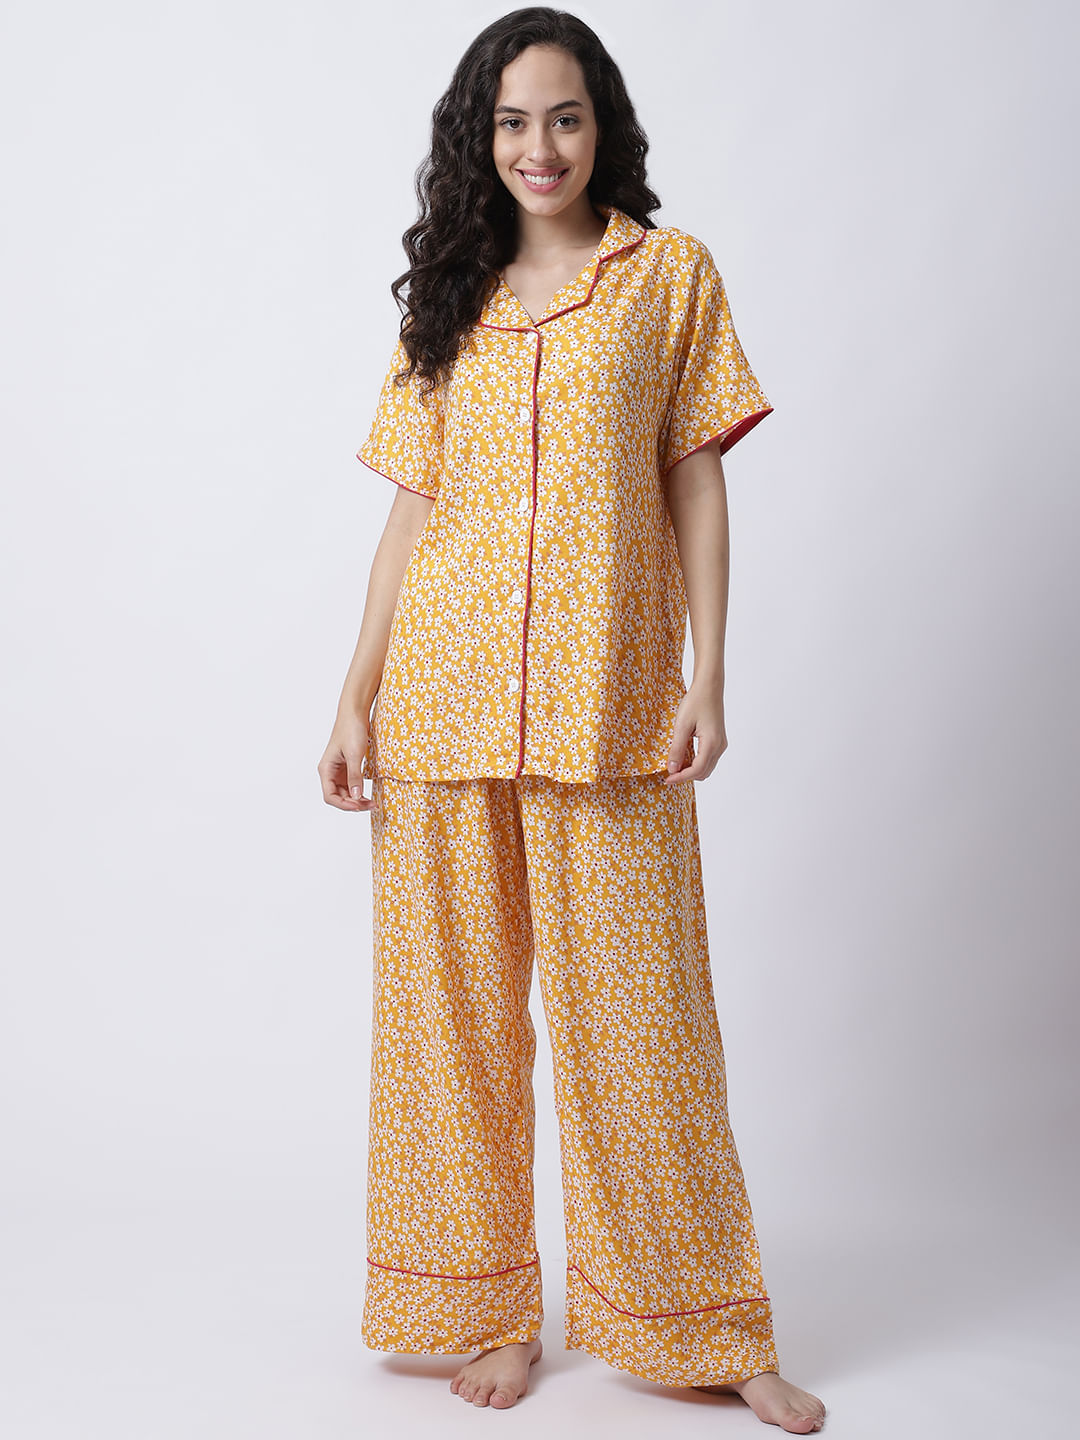 Rayon Yellow Floral Printed Night Suit set of Shirt & Pyjama trouser